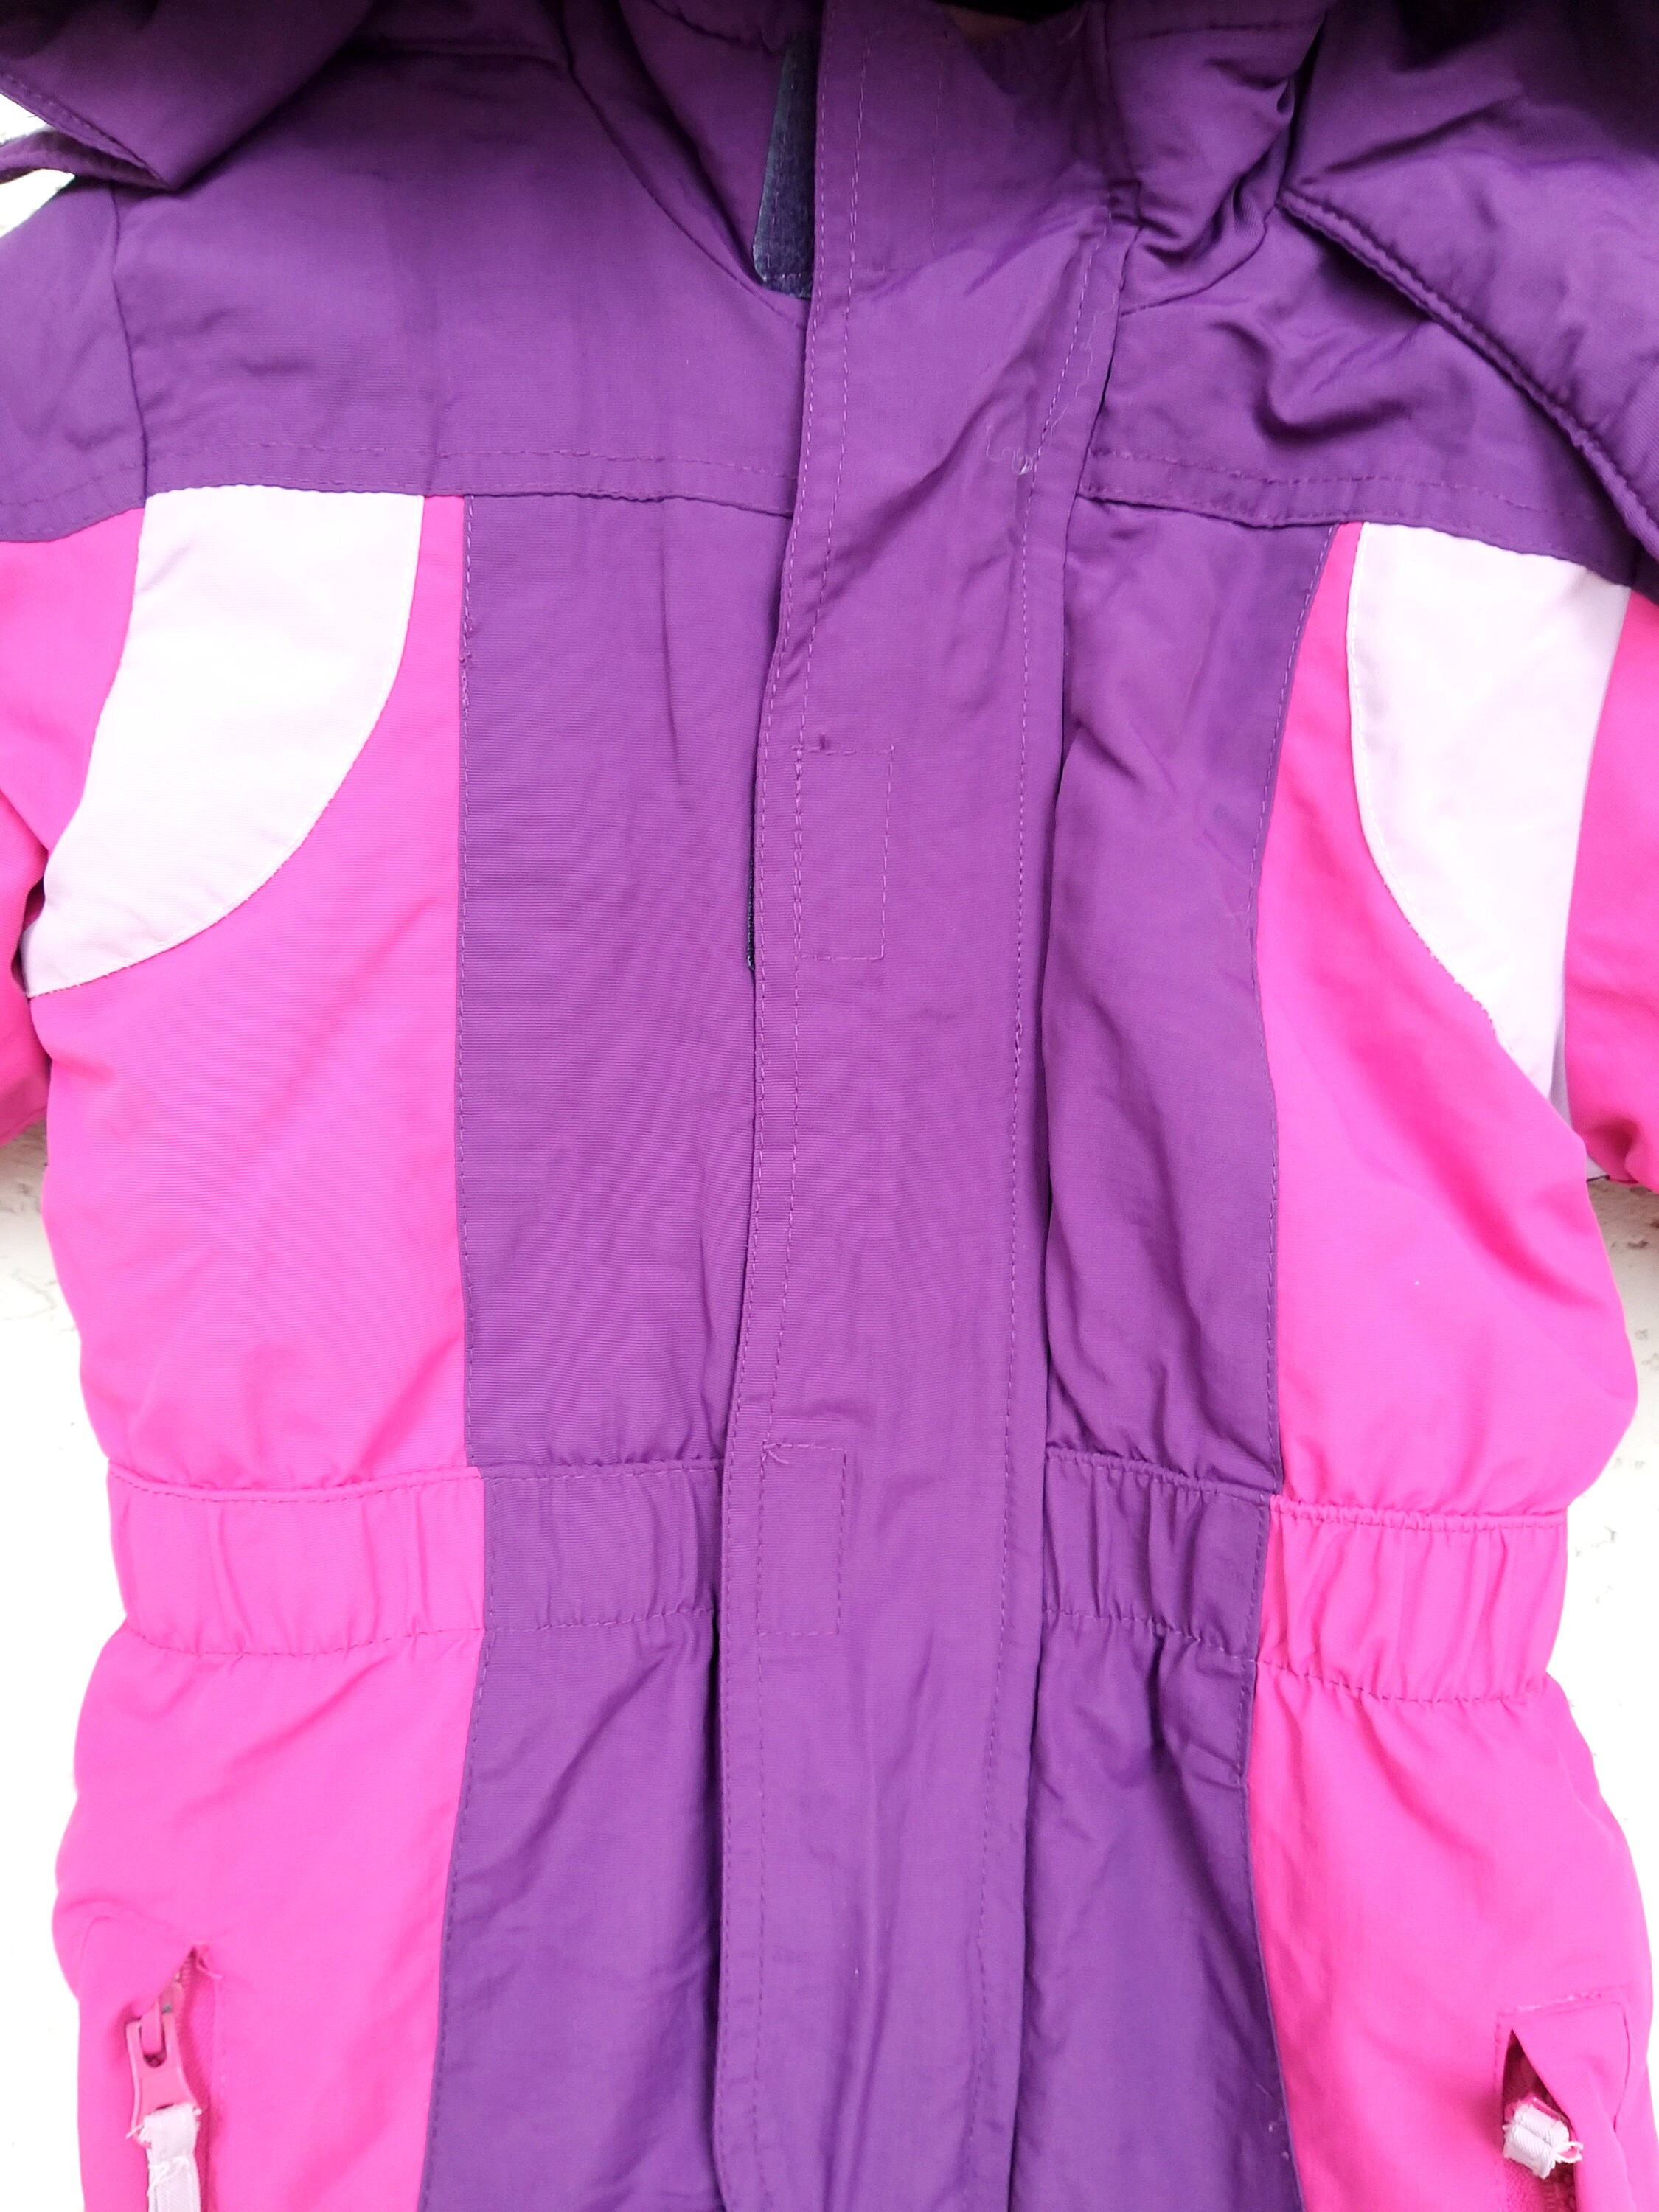 Purple ski suit baby ski suit 3 Kids Ski suit mountain | Etsy